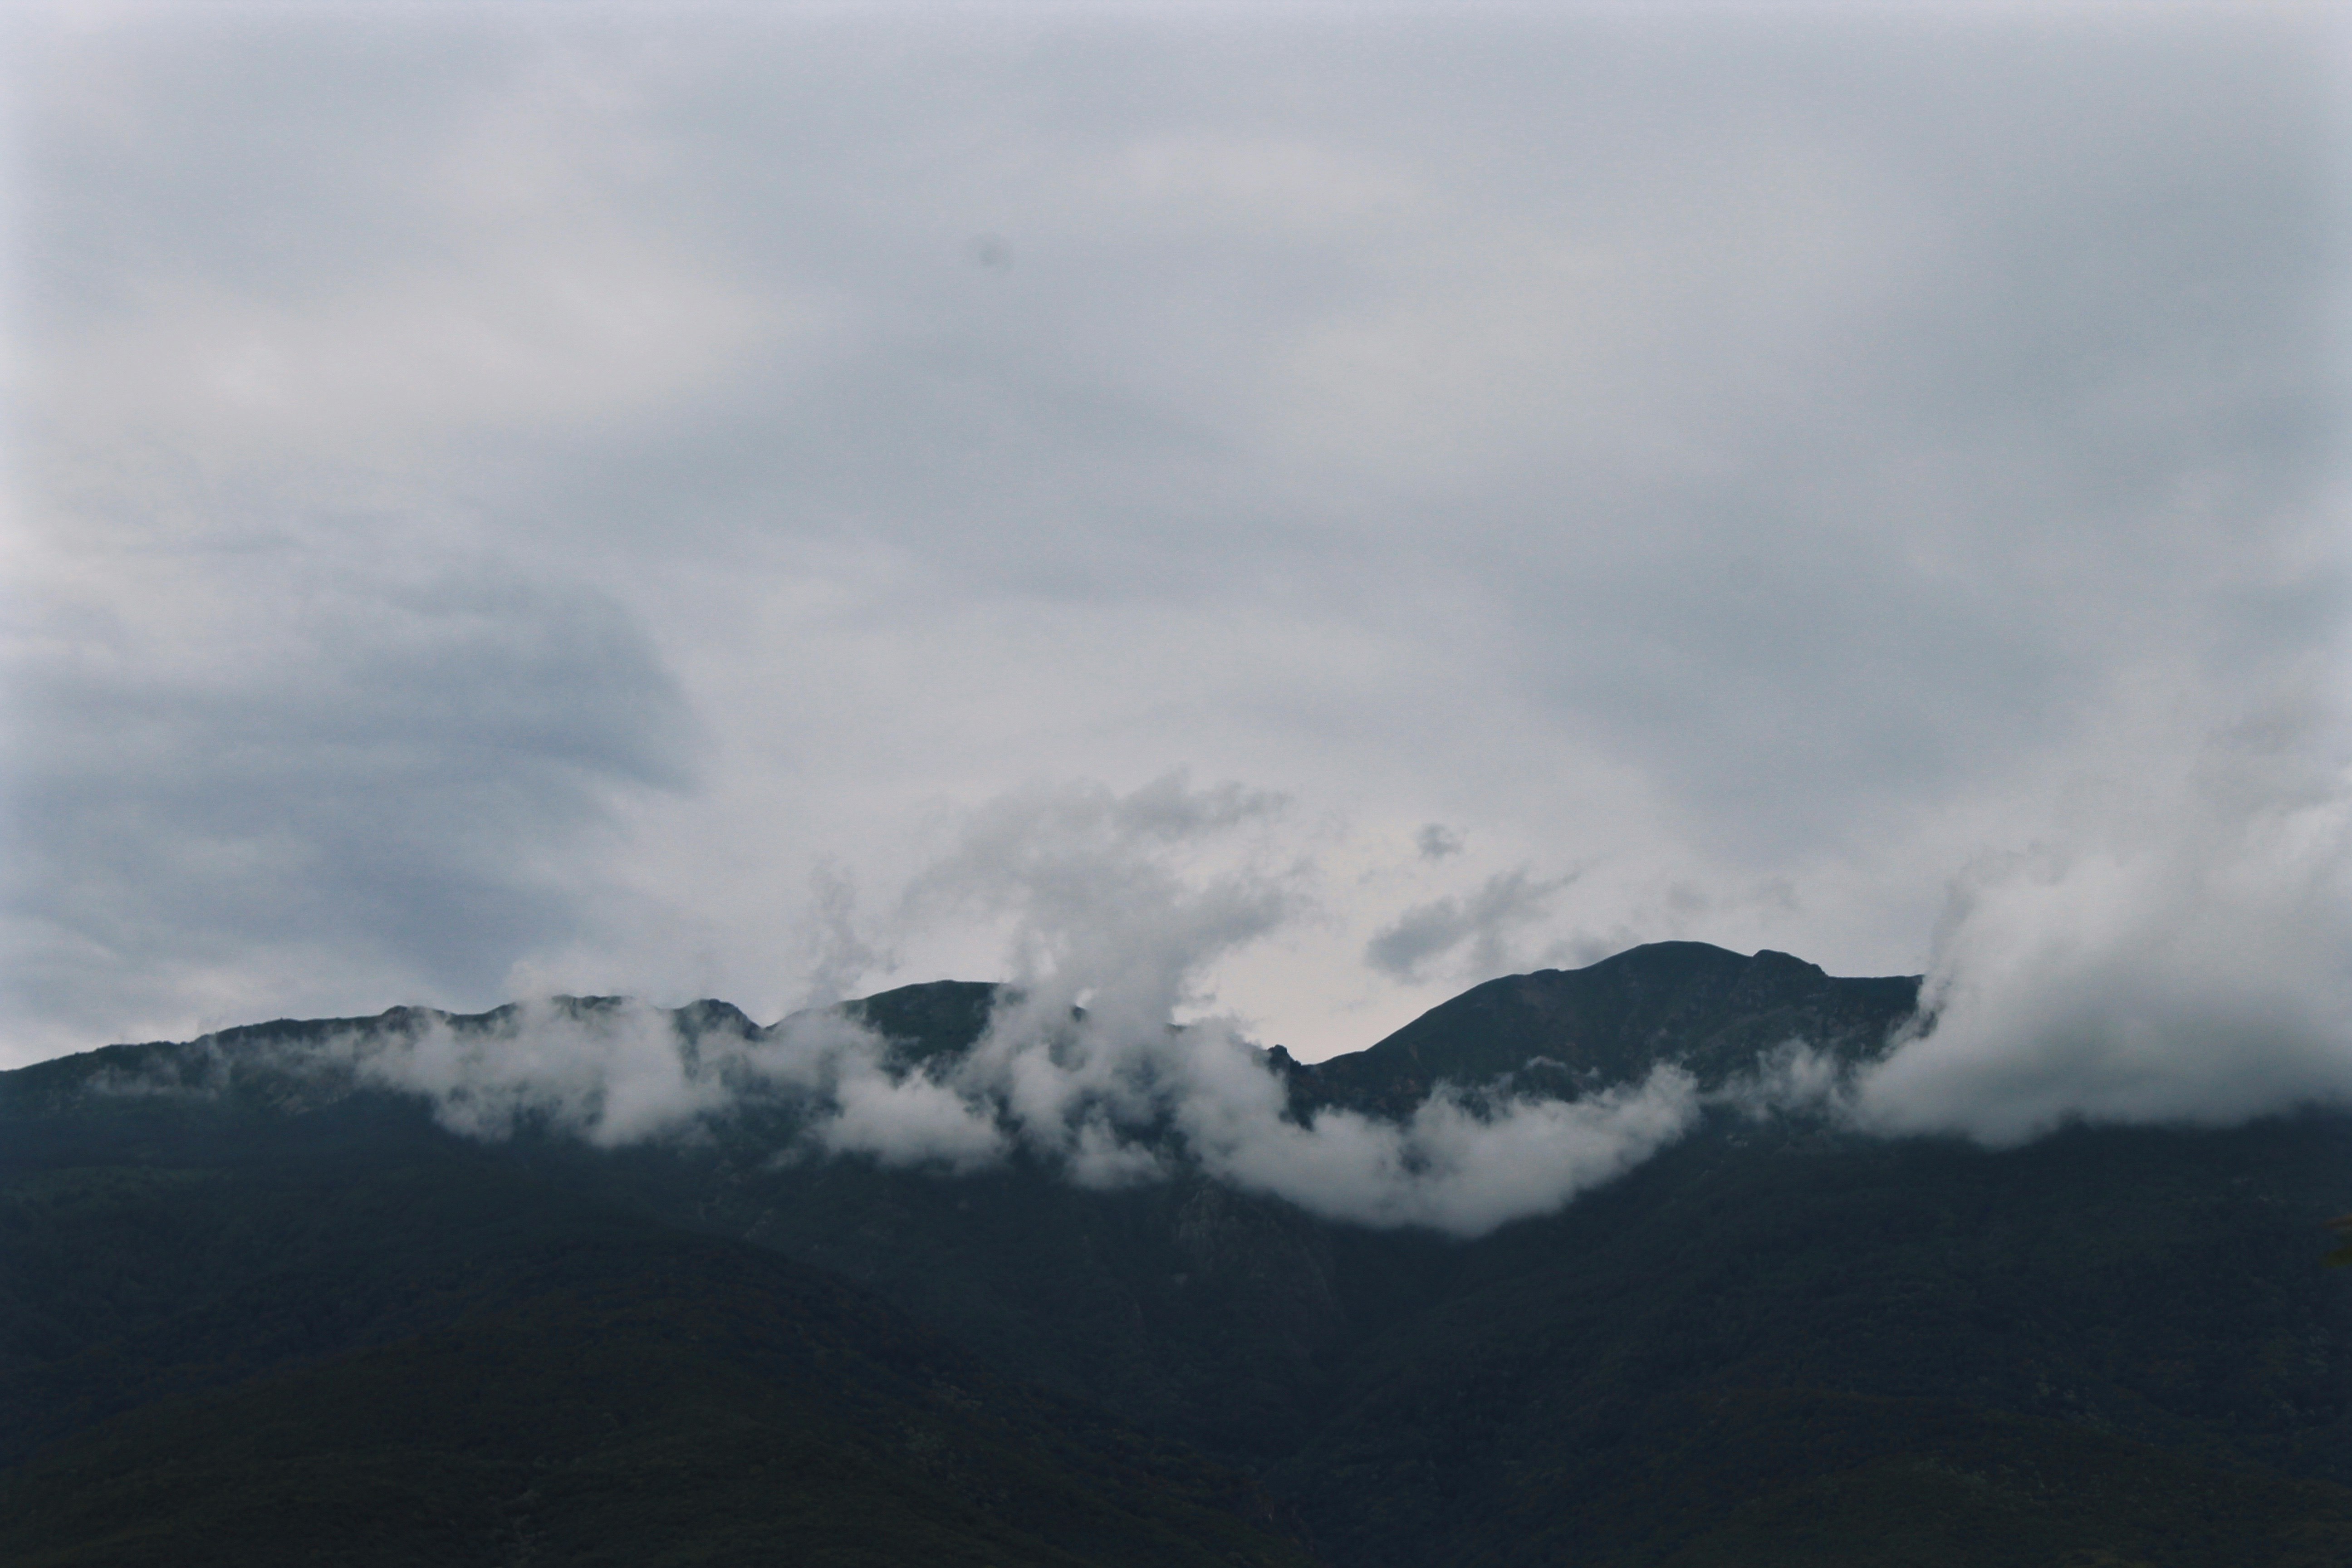 black mountain under white clouds